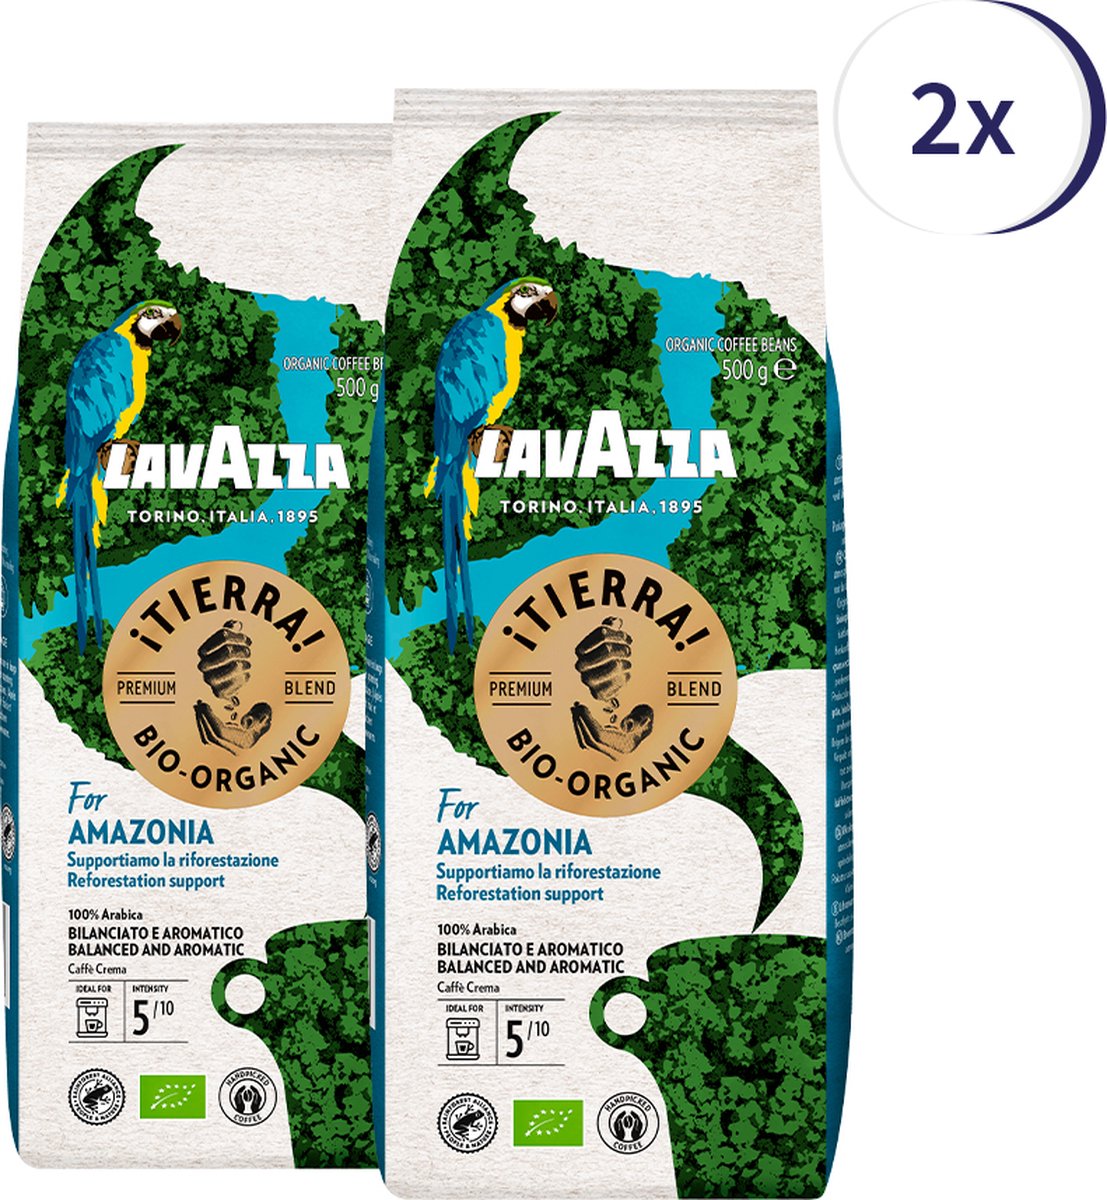 Lavazza Tierra for Amazonia biologische koffiebonen - 500 gram krimp x2